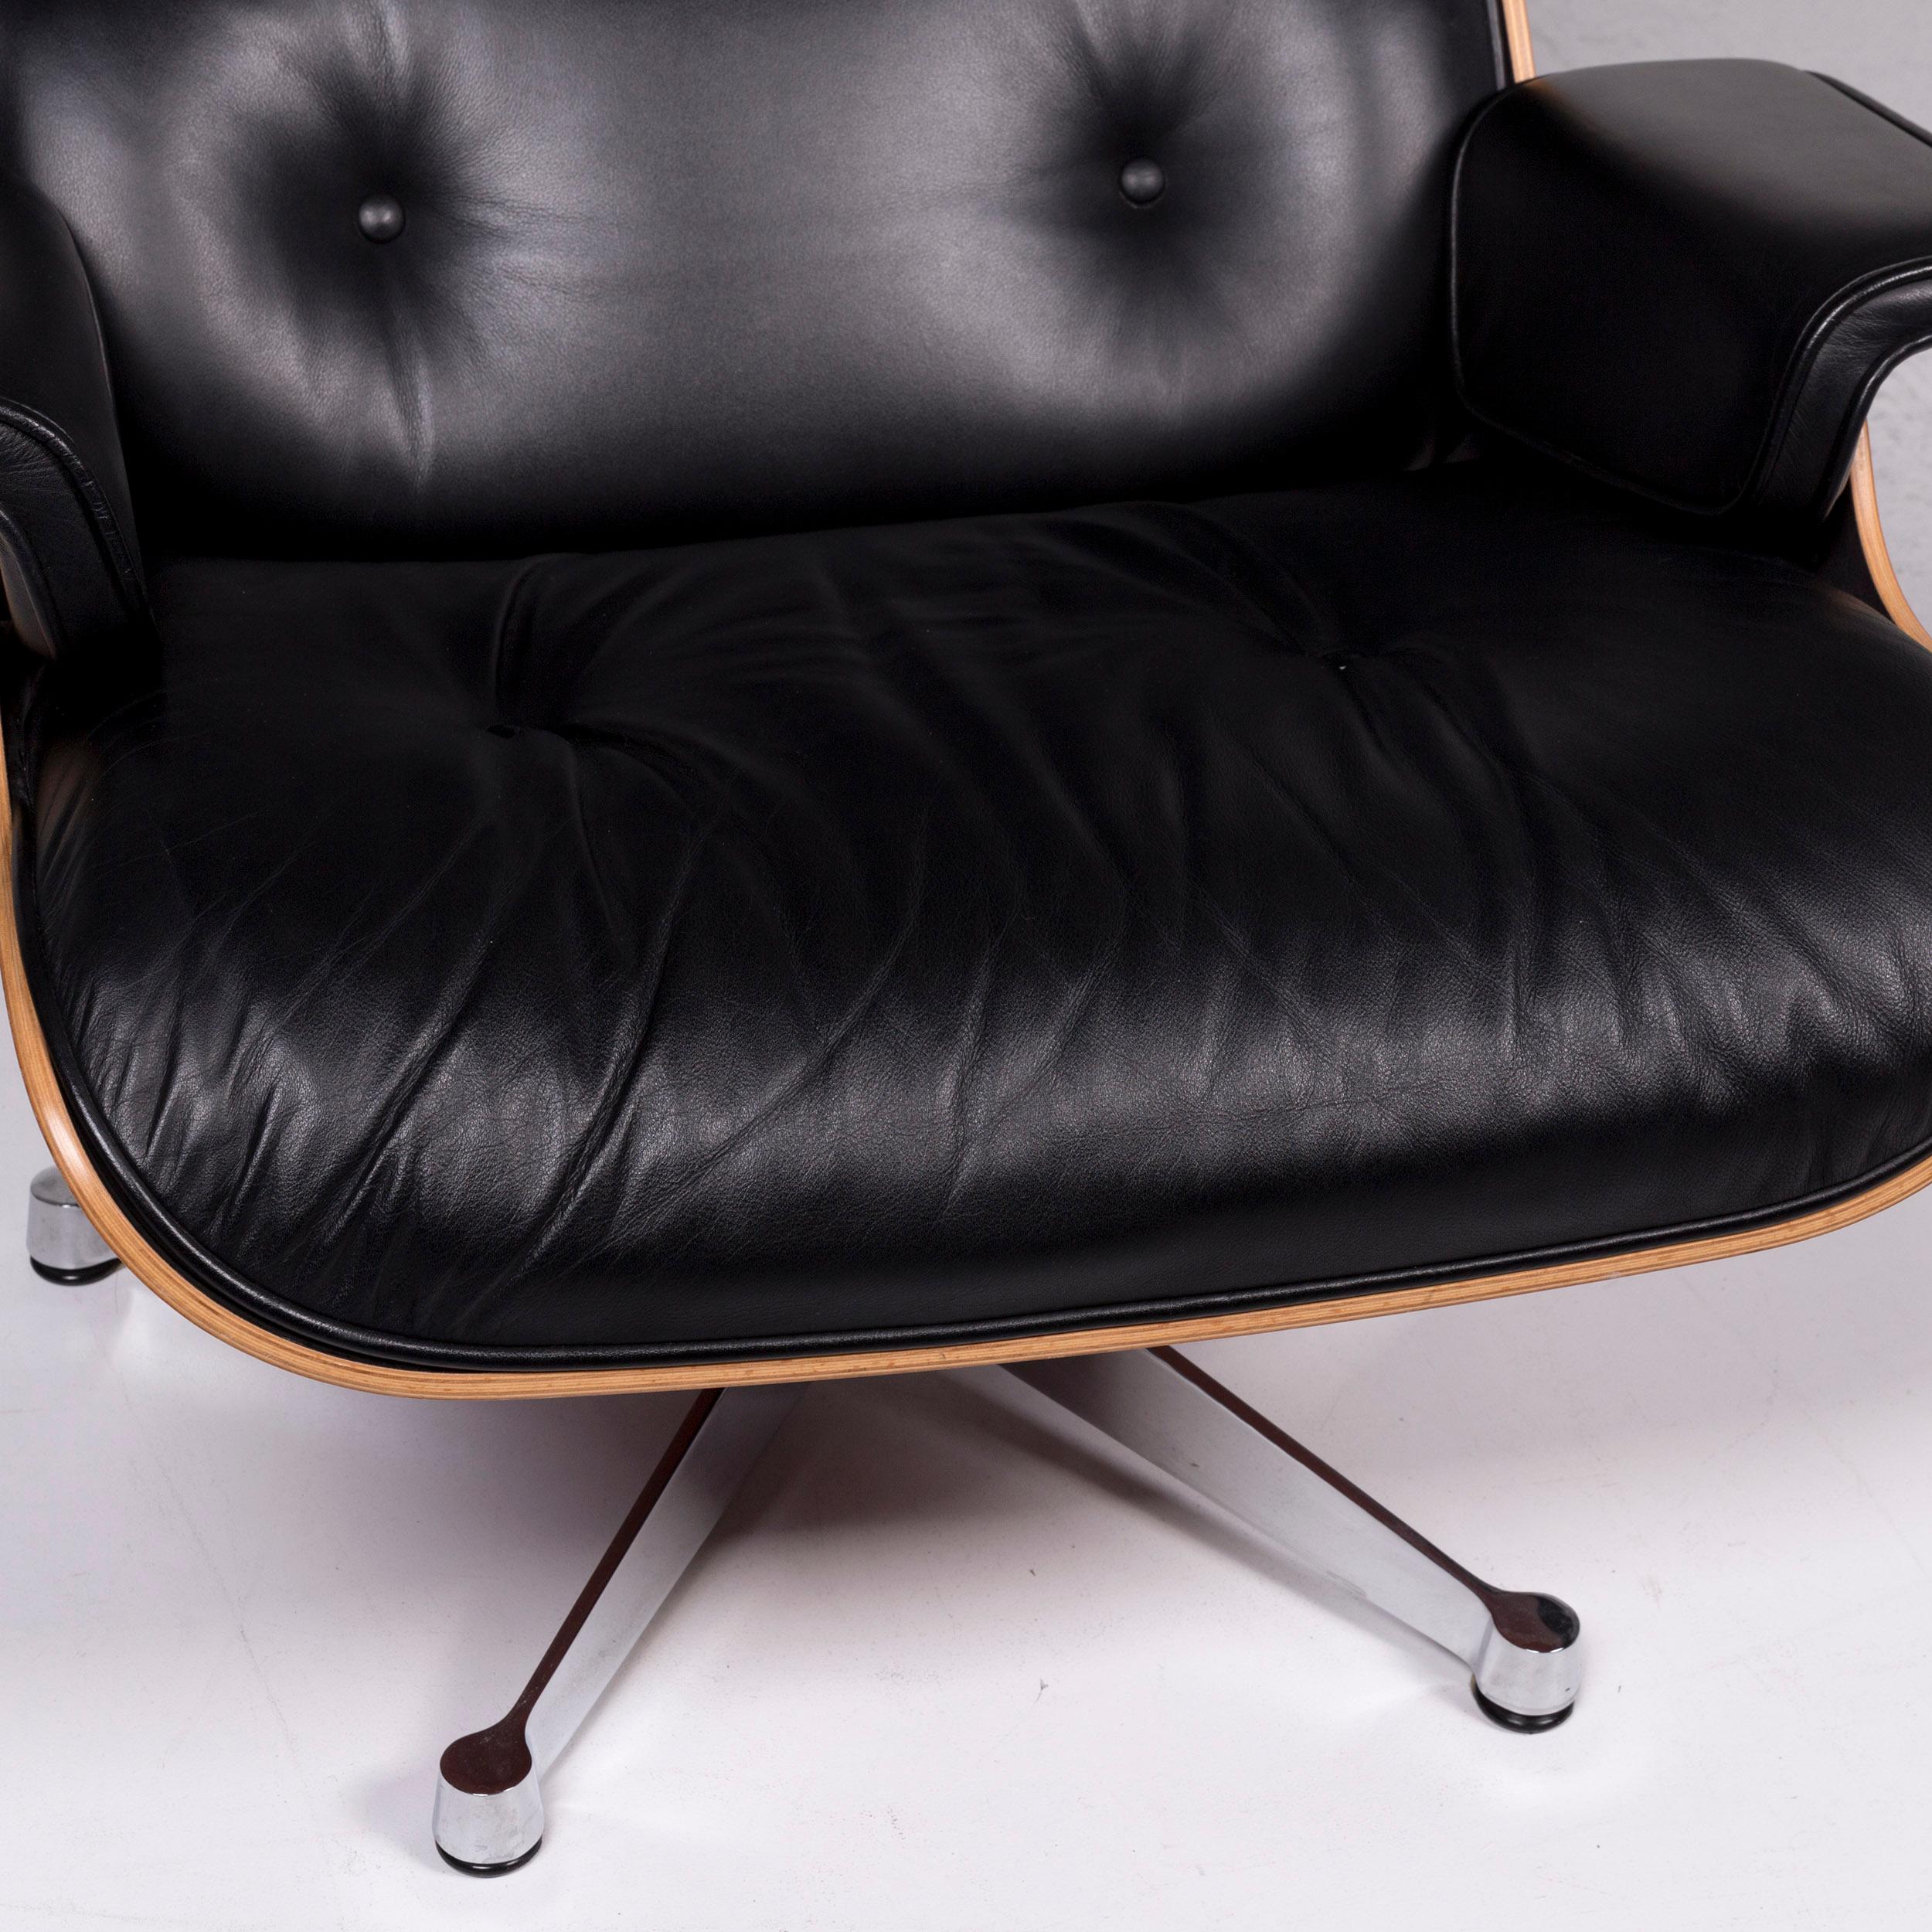 German Vitra Eames Lounge Chair Leather Armchair Black Incl. Stool Cherrywood Club